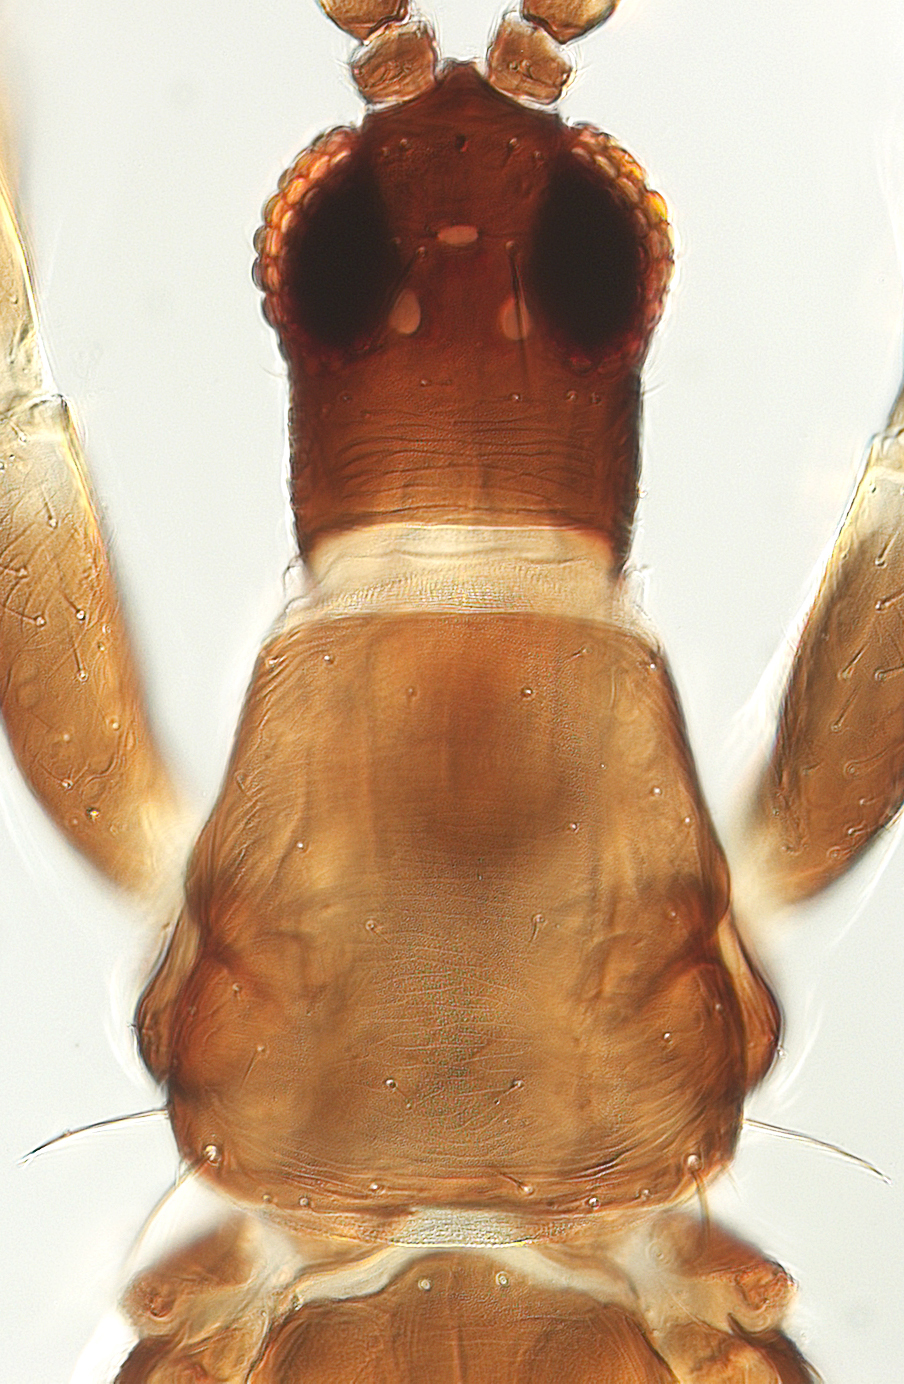 Prionotothrips procerus